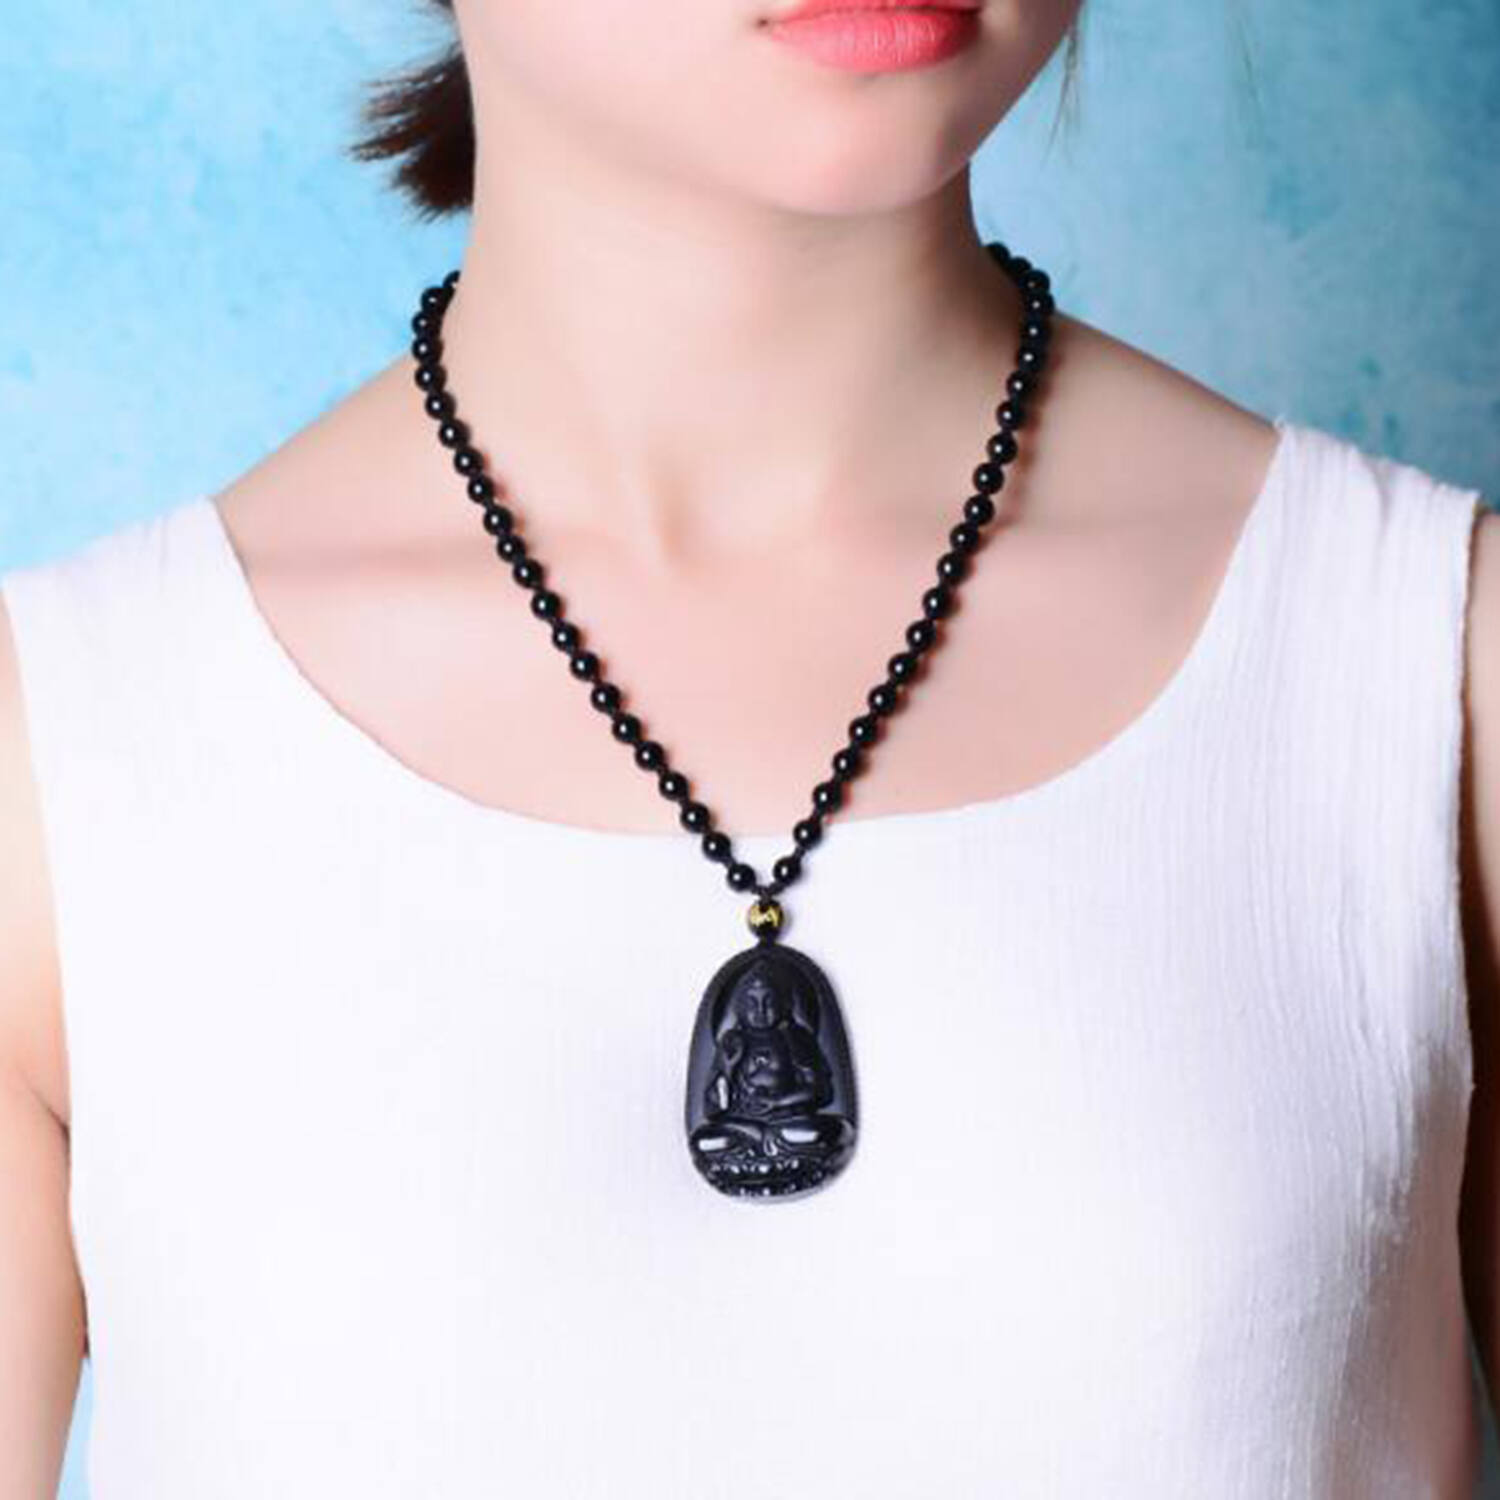 1960's Black Stone Necklace | Etsy | Stone necklace, Necklace, Black stone